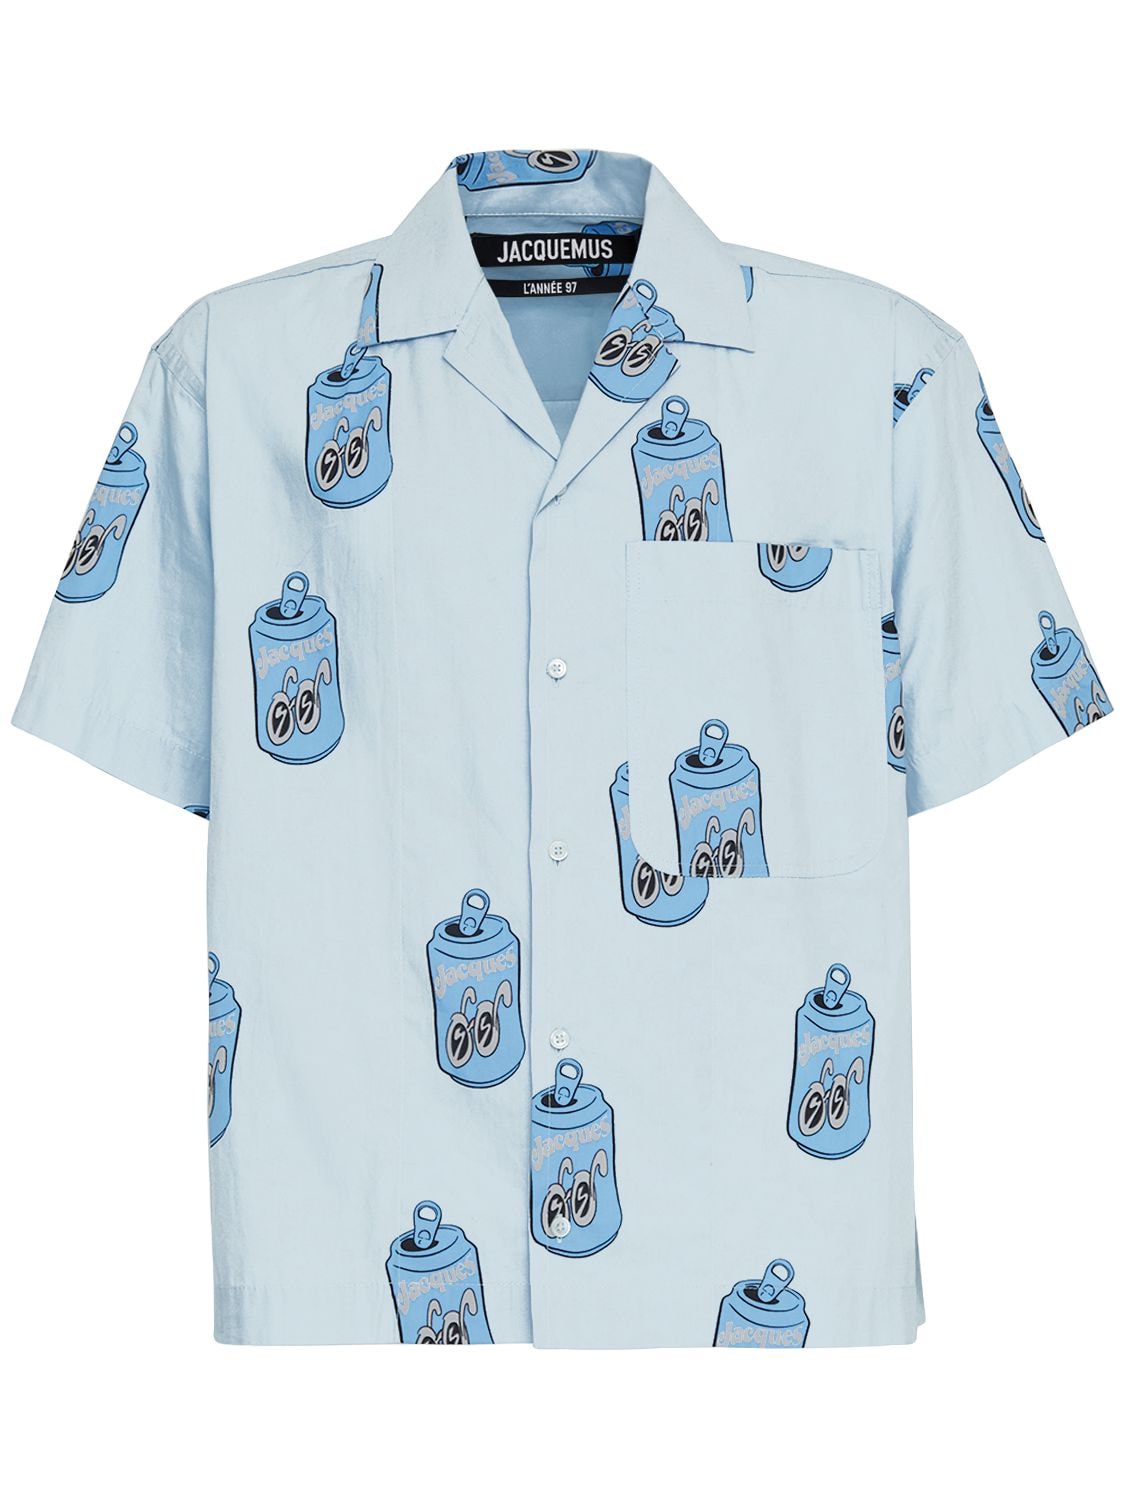 Blue JACQUEMUS Can Print Cotton Bowling Shirt on COOLS